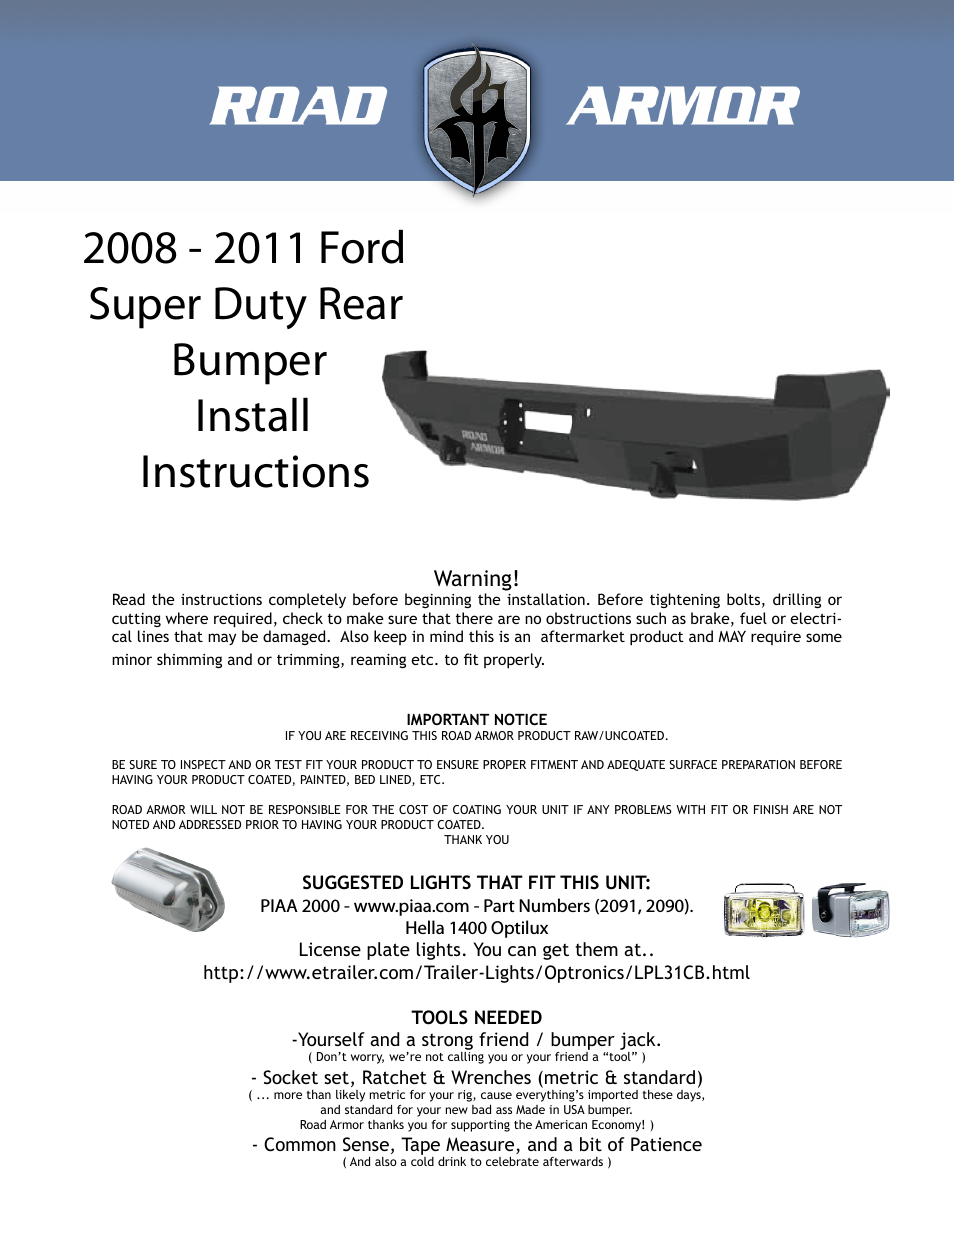 2008-2011 Ford Super Duty Rear Bumper